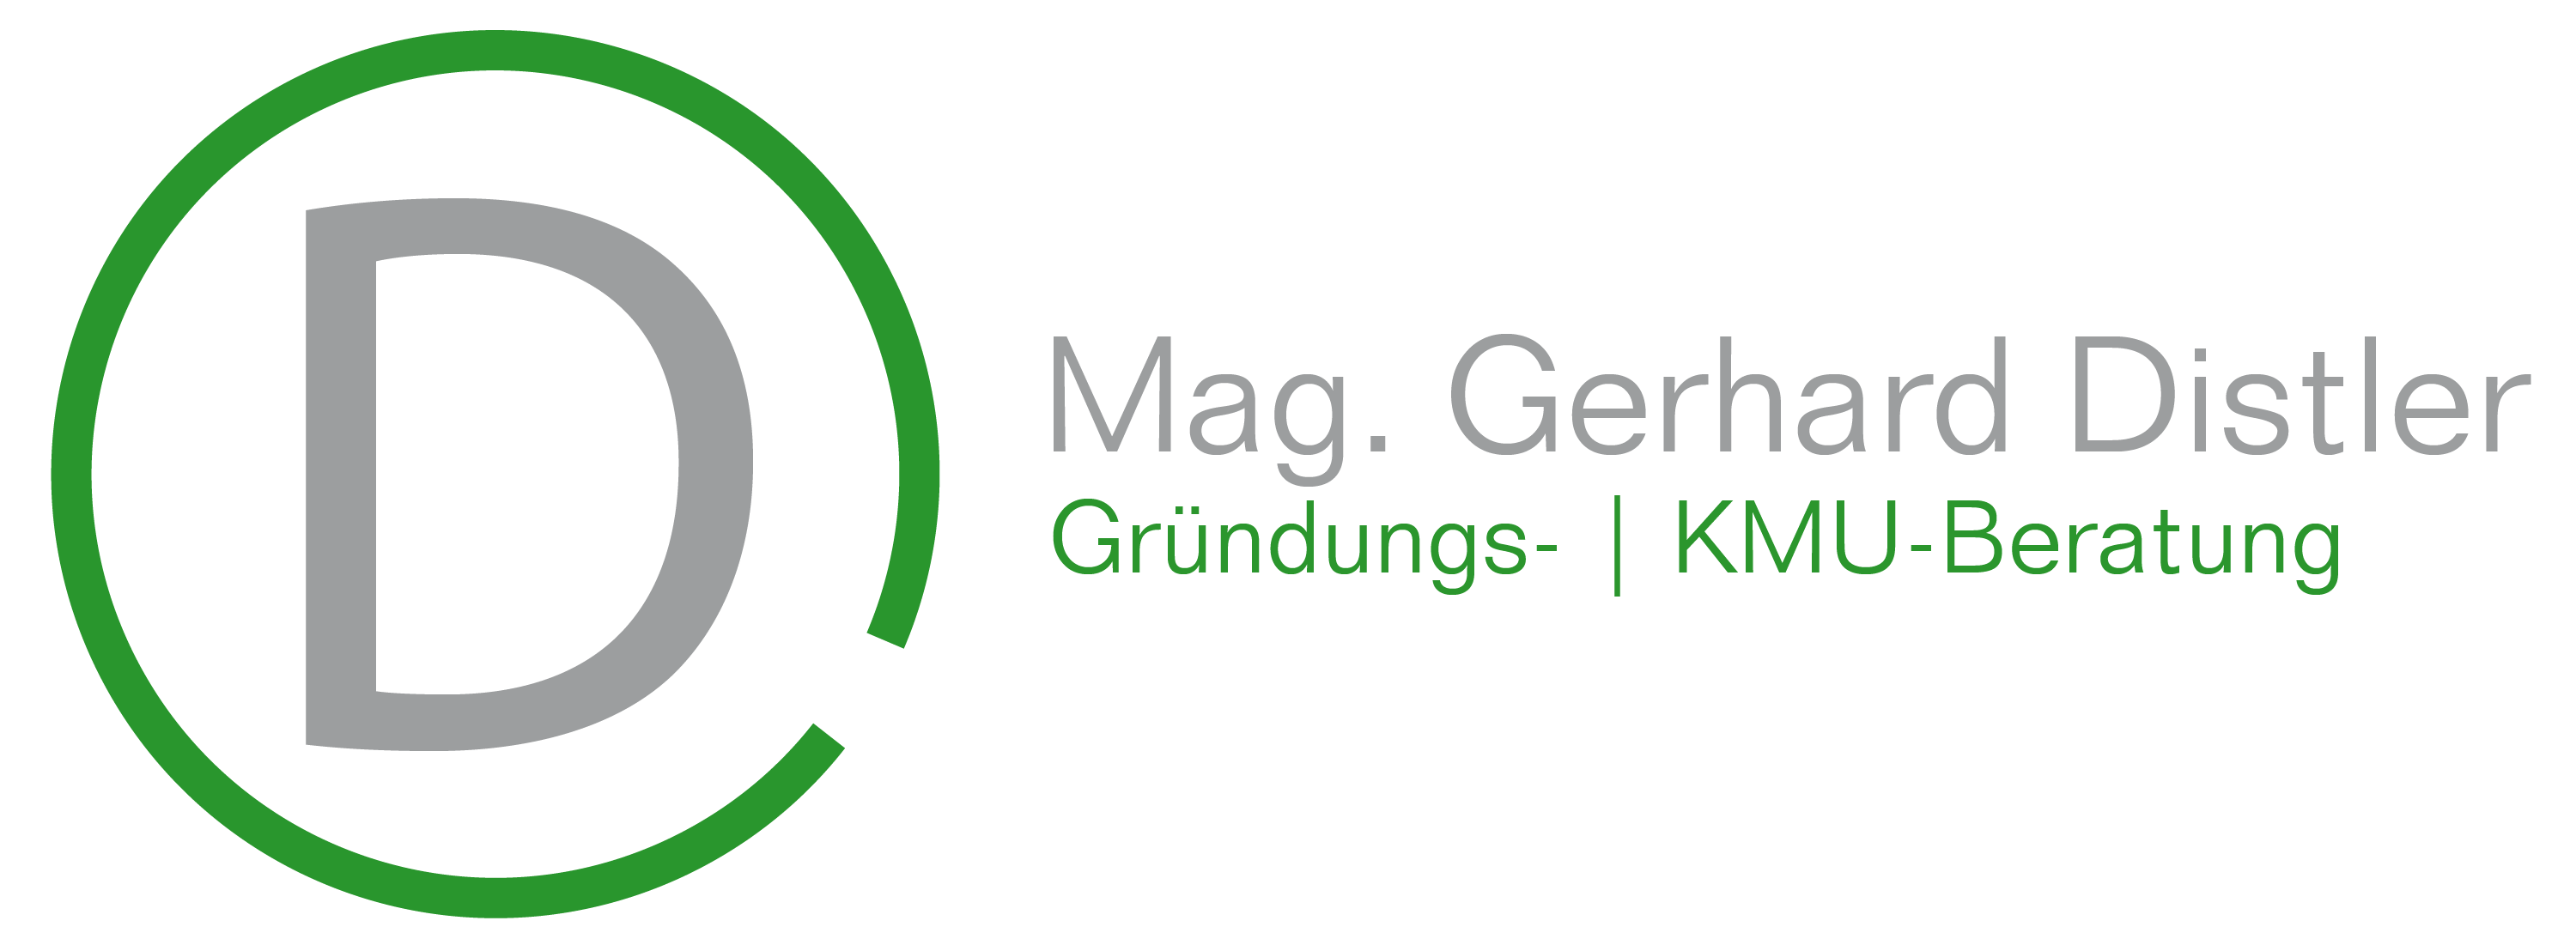 Mag. Gerhard Distler Unternehmensberatung cover